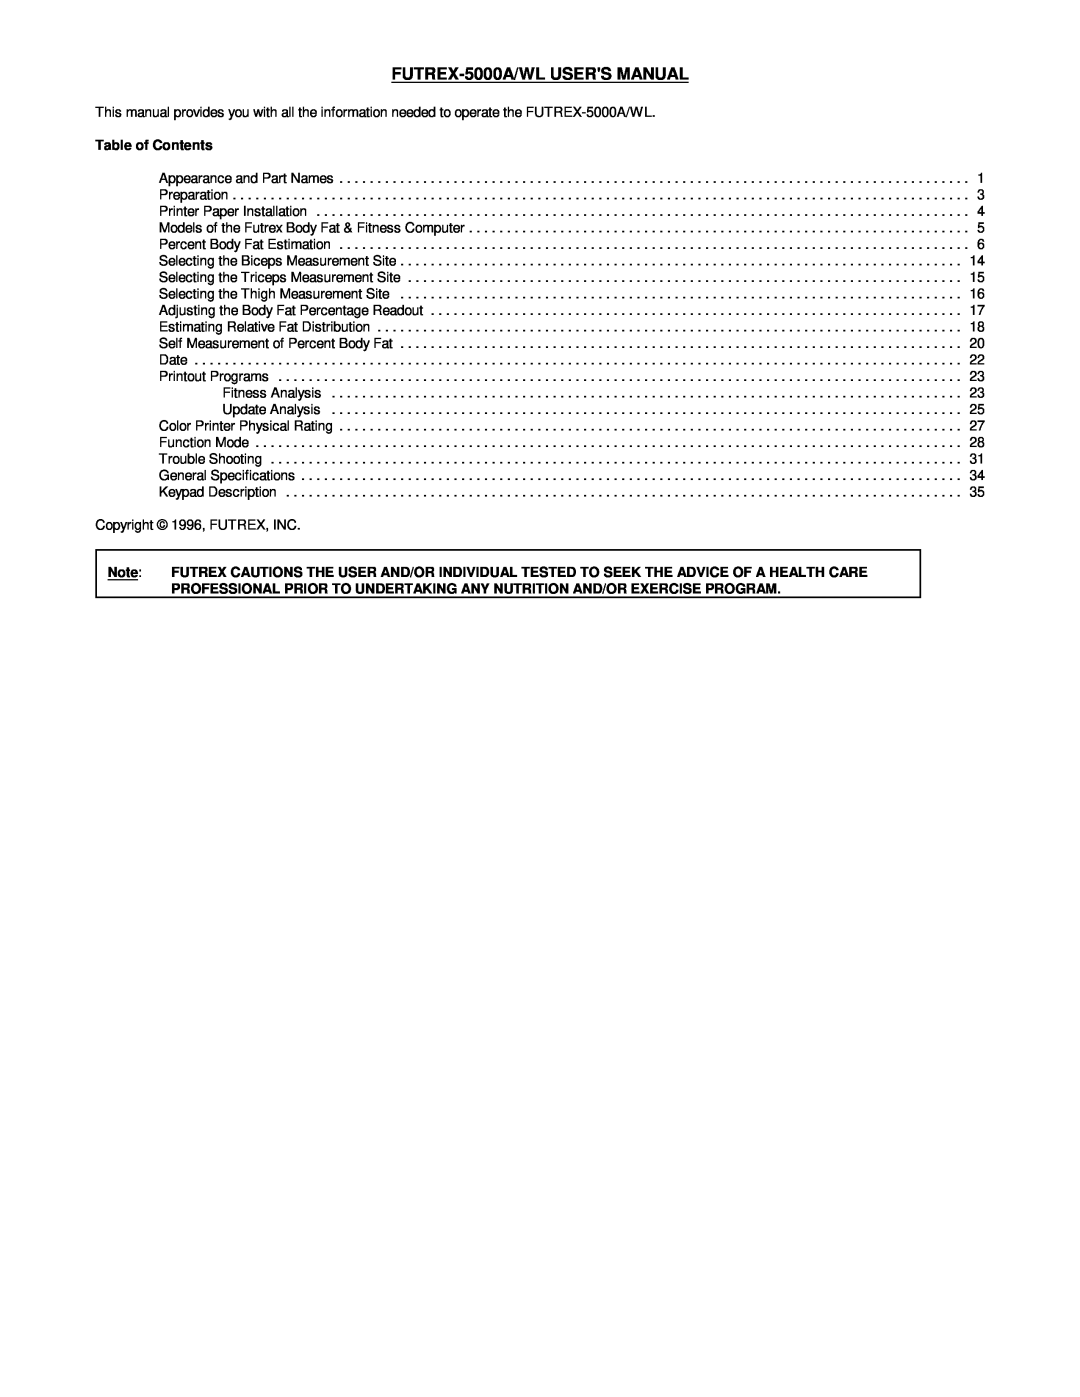 Futrex 5000A/ZL, 5000/XL manual Table of Contents, FUTREX-5000A/WL USERS MANUAL 